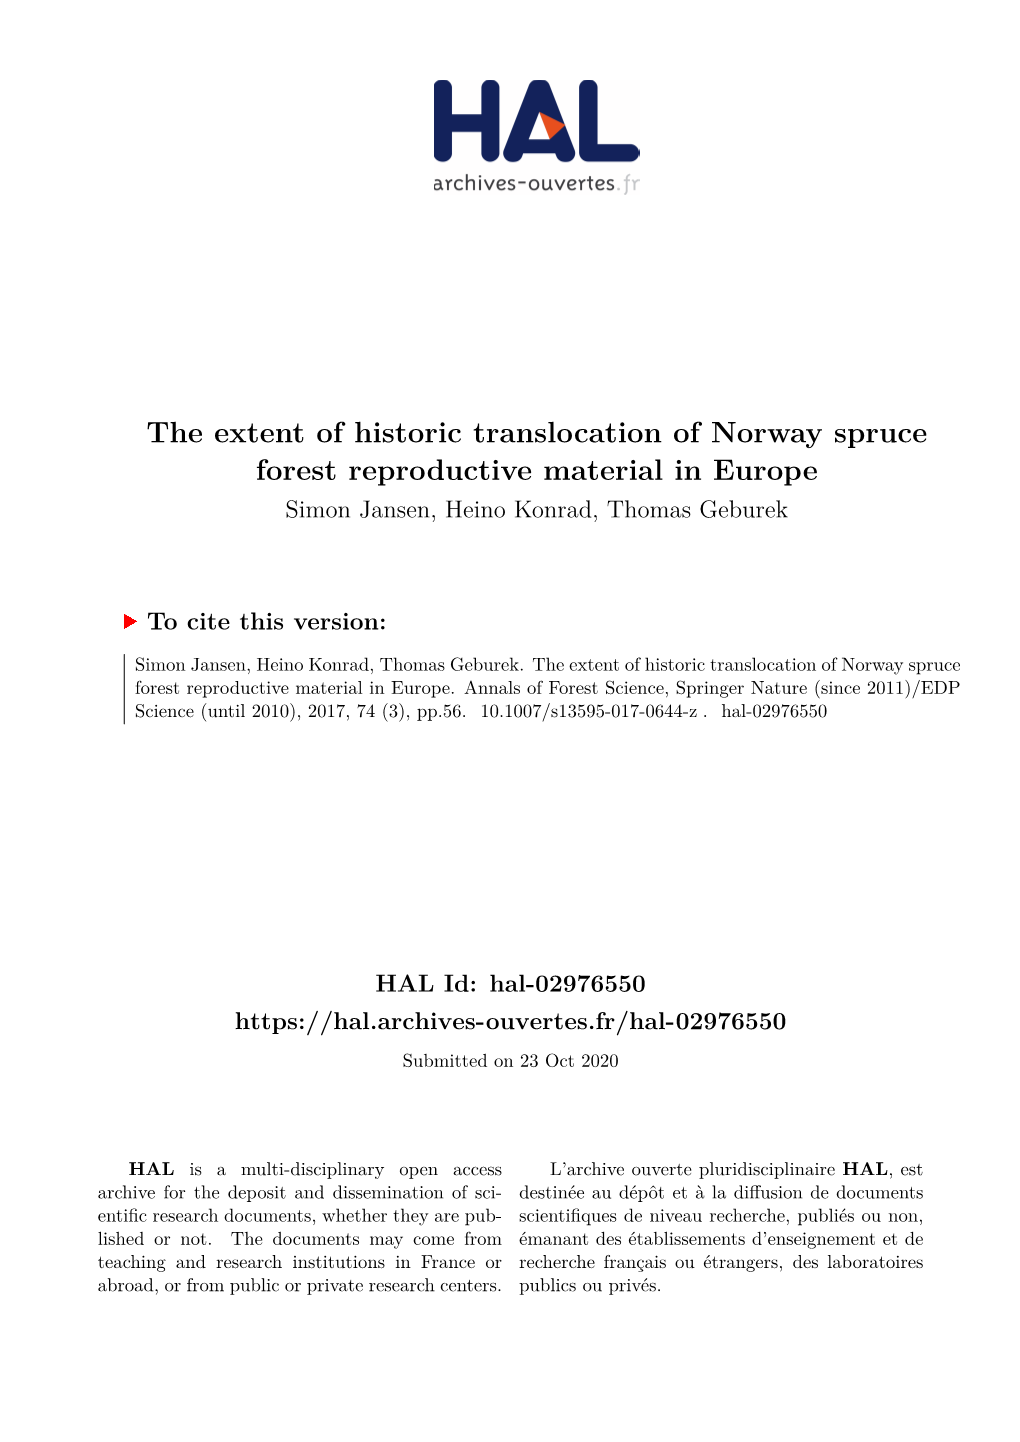 The Extent of Historic Translocation of Norway Spruce Forest Reproductive Material in Europe Simon Jansen, Heino Konrad, Thomas Geburek